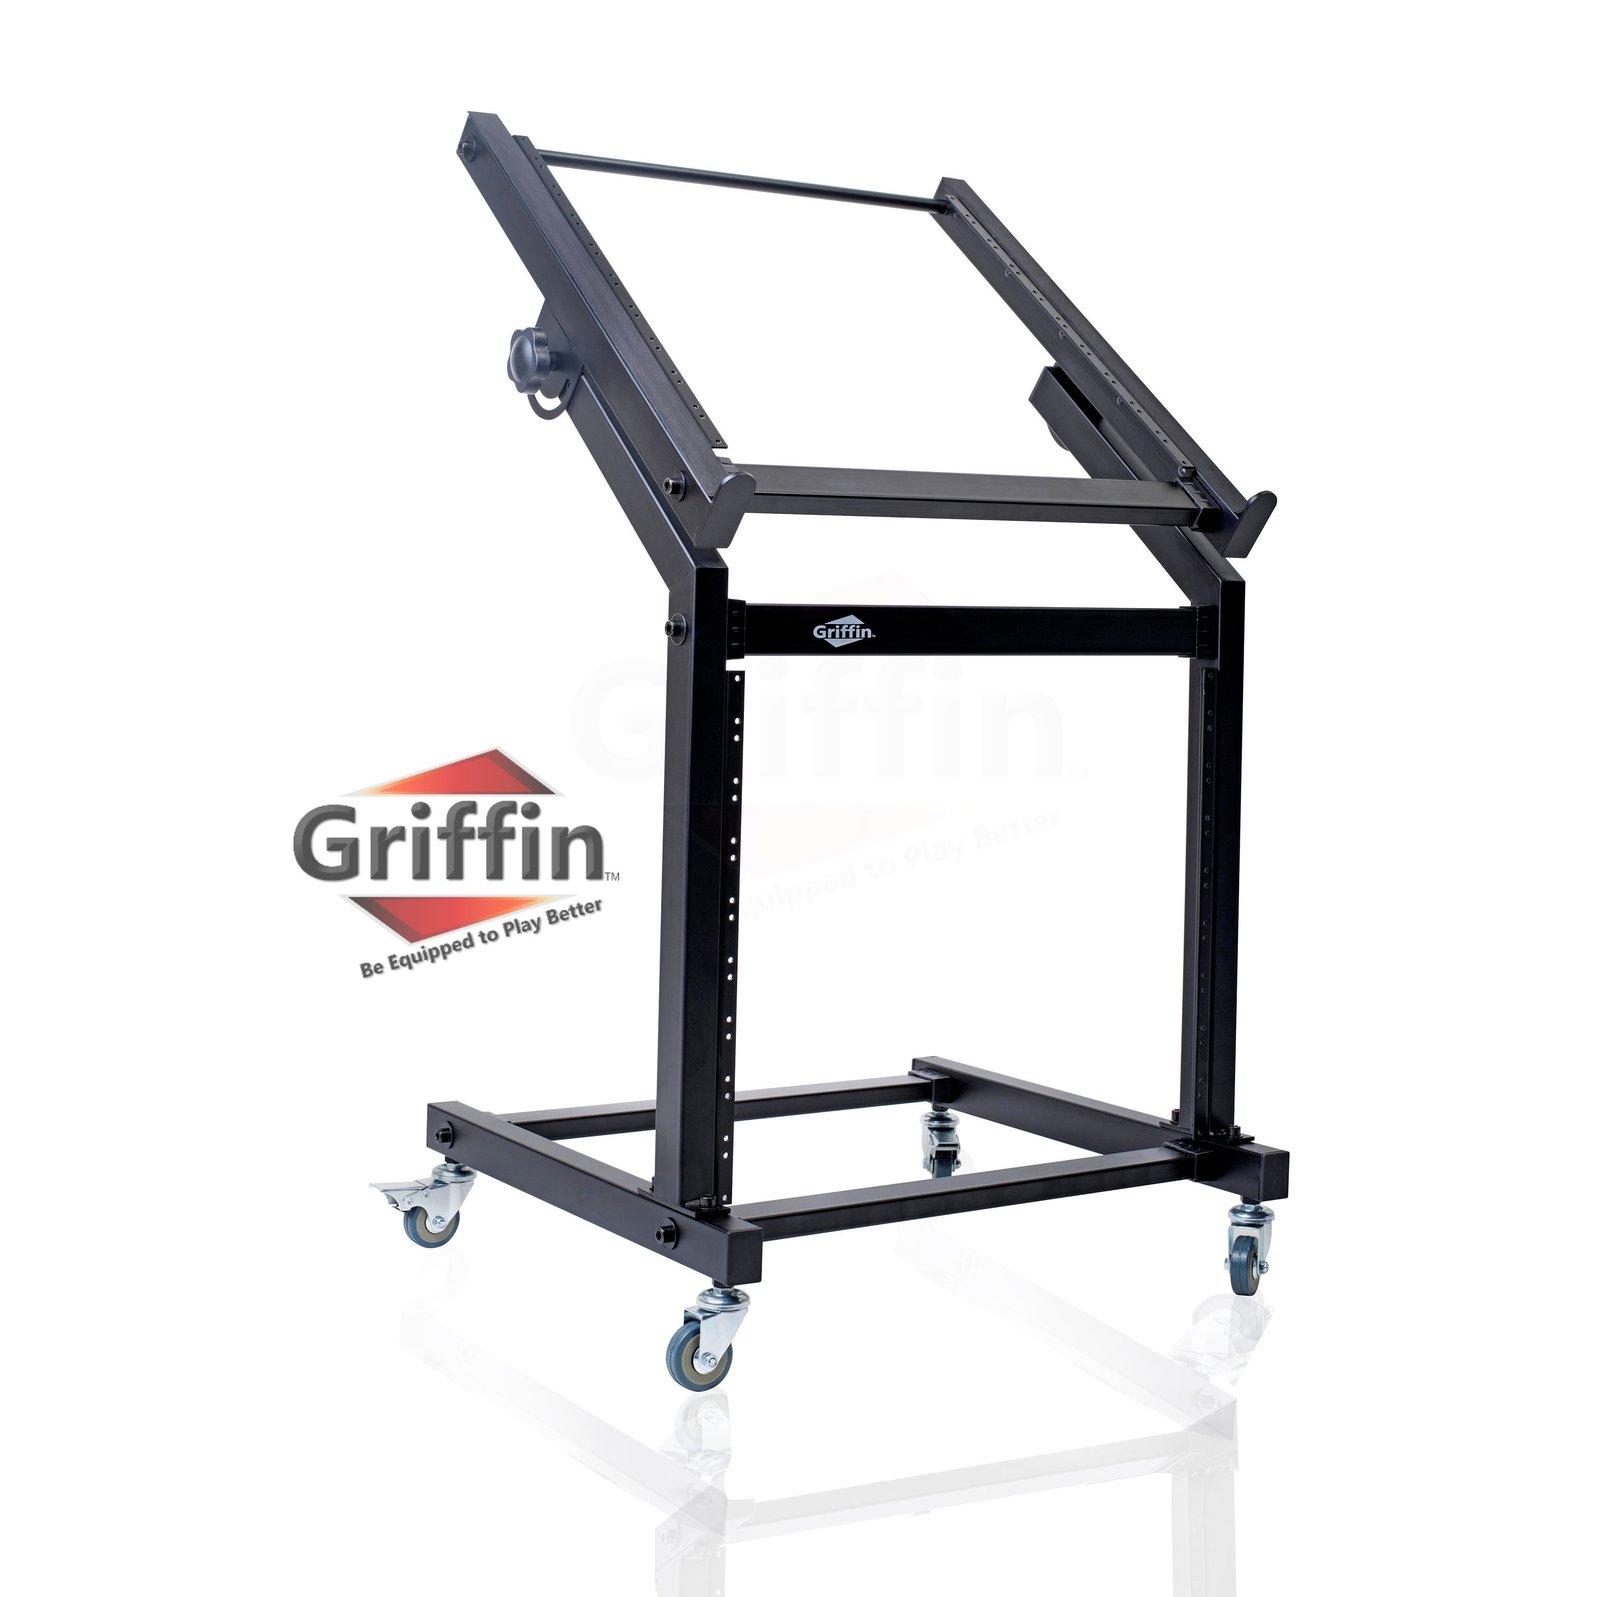 Rack Mount Rolling Stand & Adjustable Mixer Platform Rails by GRIFFIN - 19U Cart